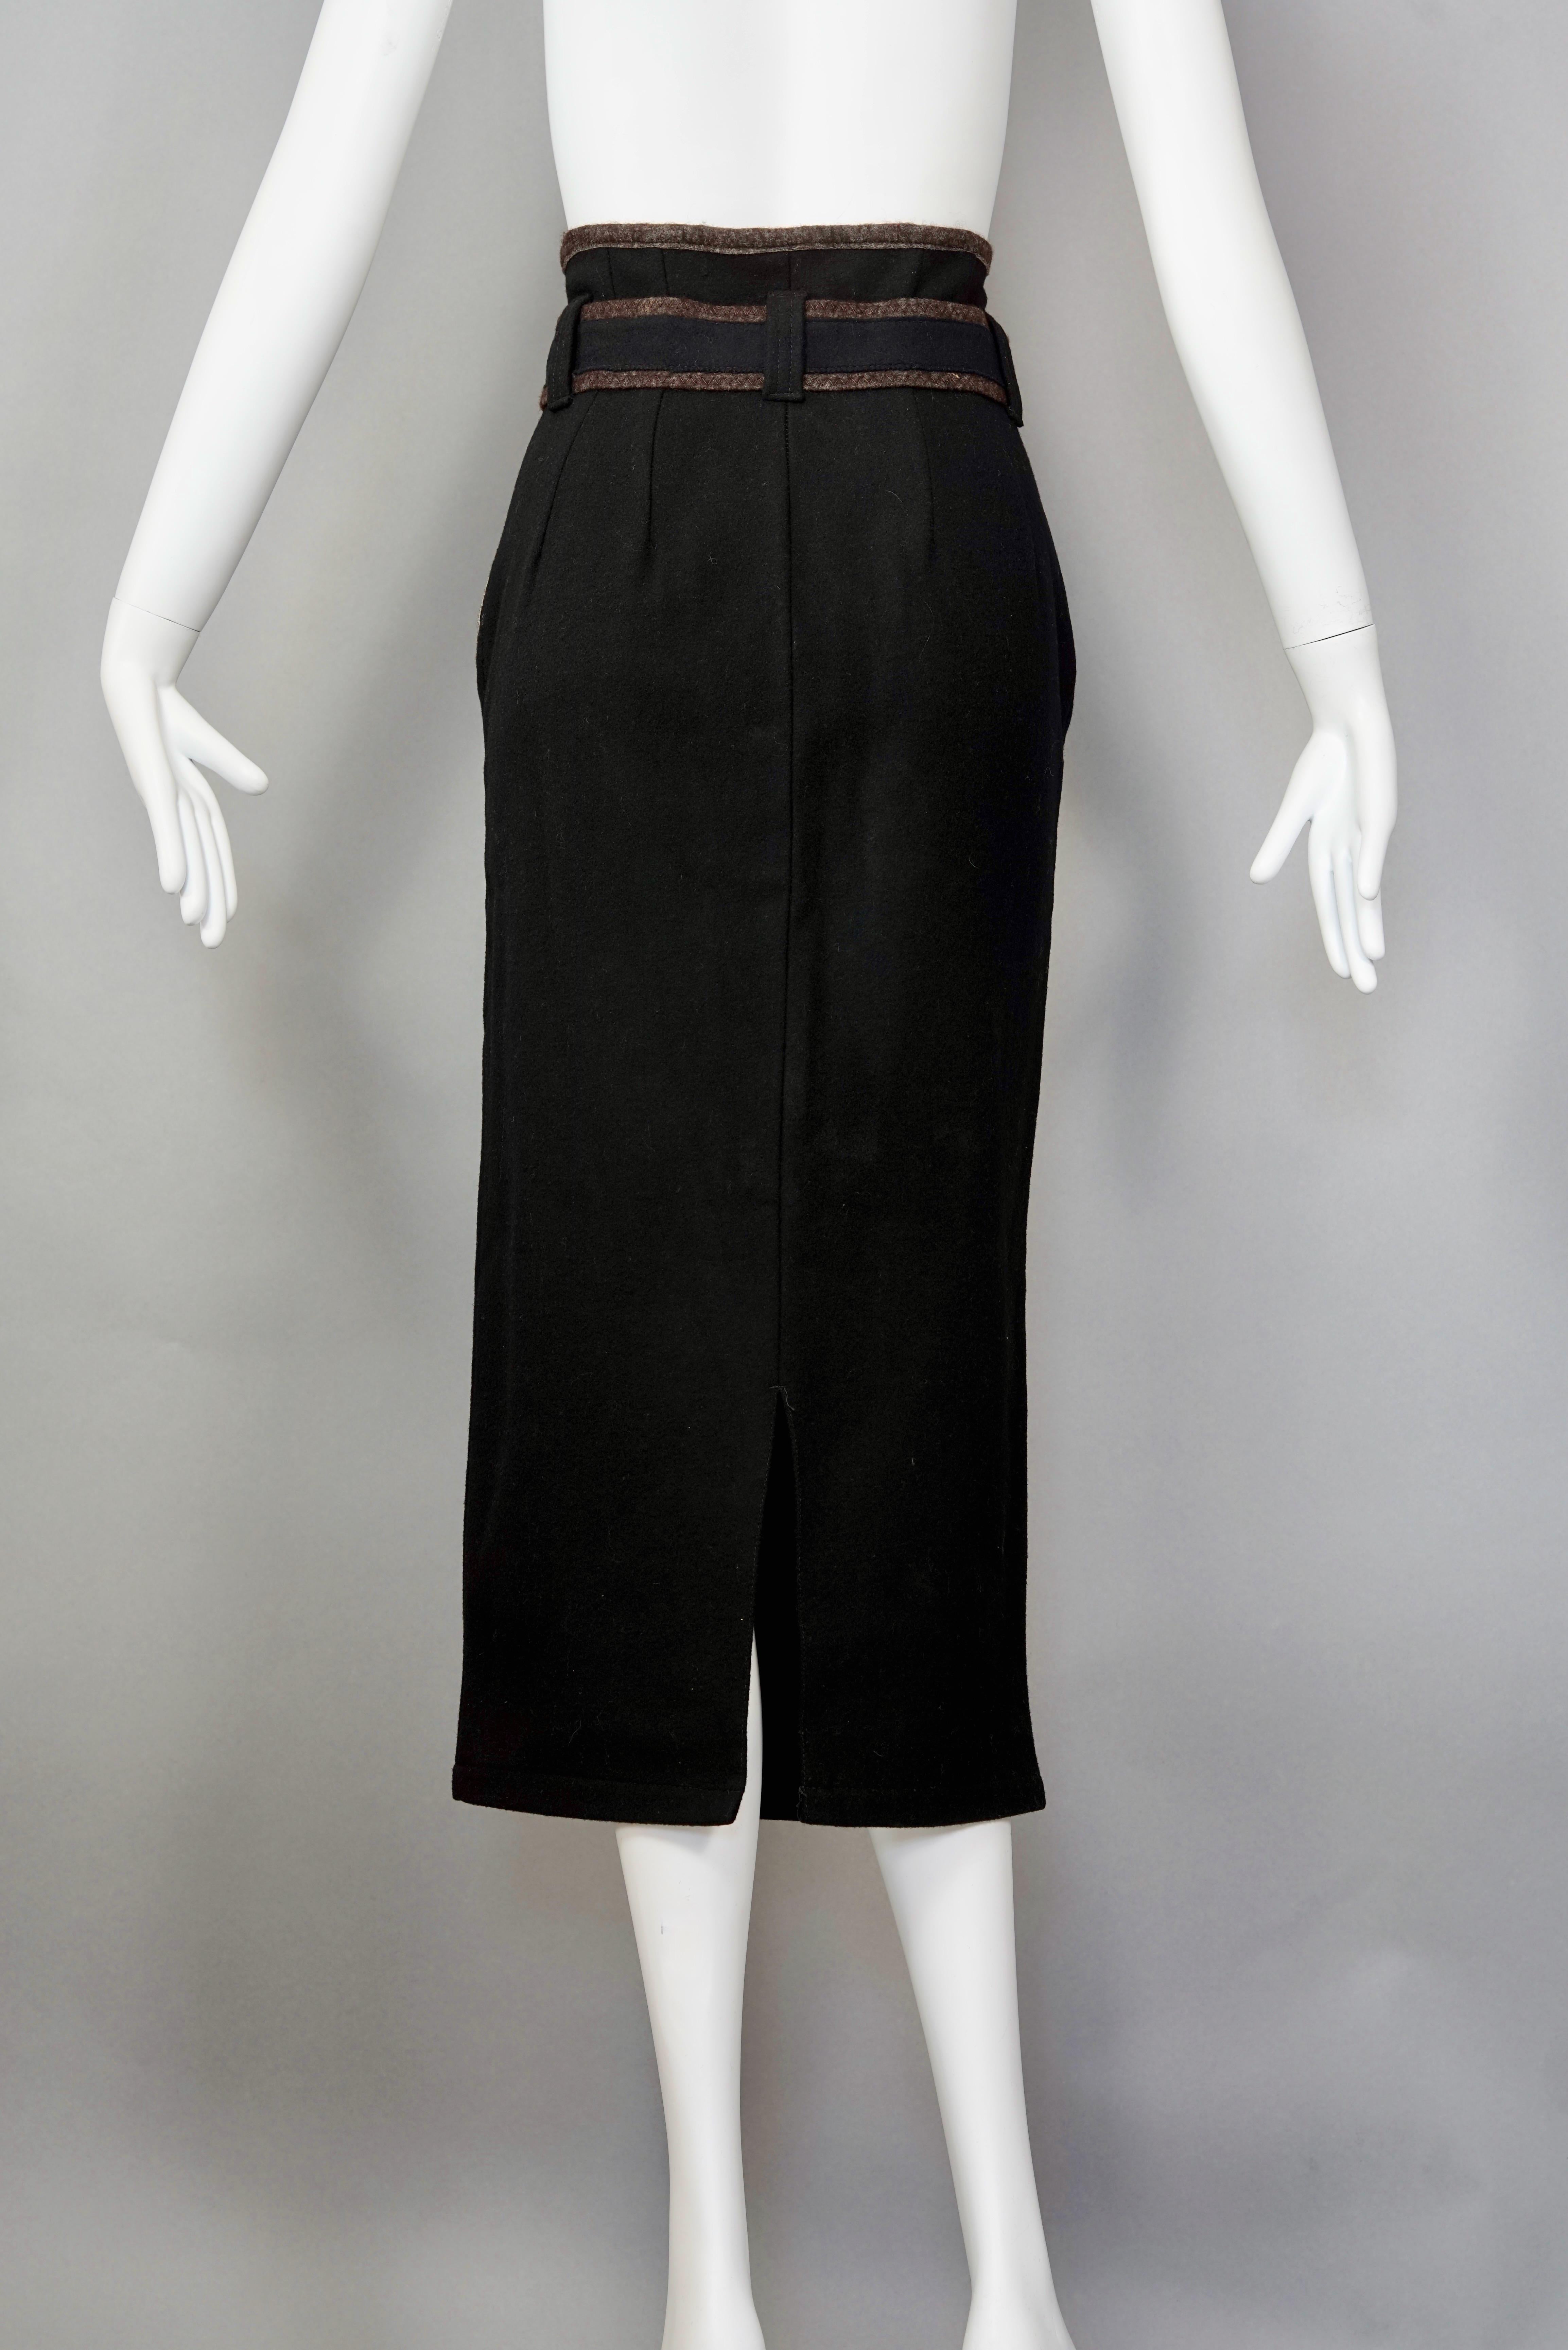 Vintage 1988 JEAN PAUL GAULTIER High Waist Belted Skirt For Sale 2